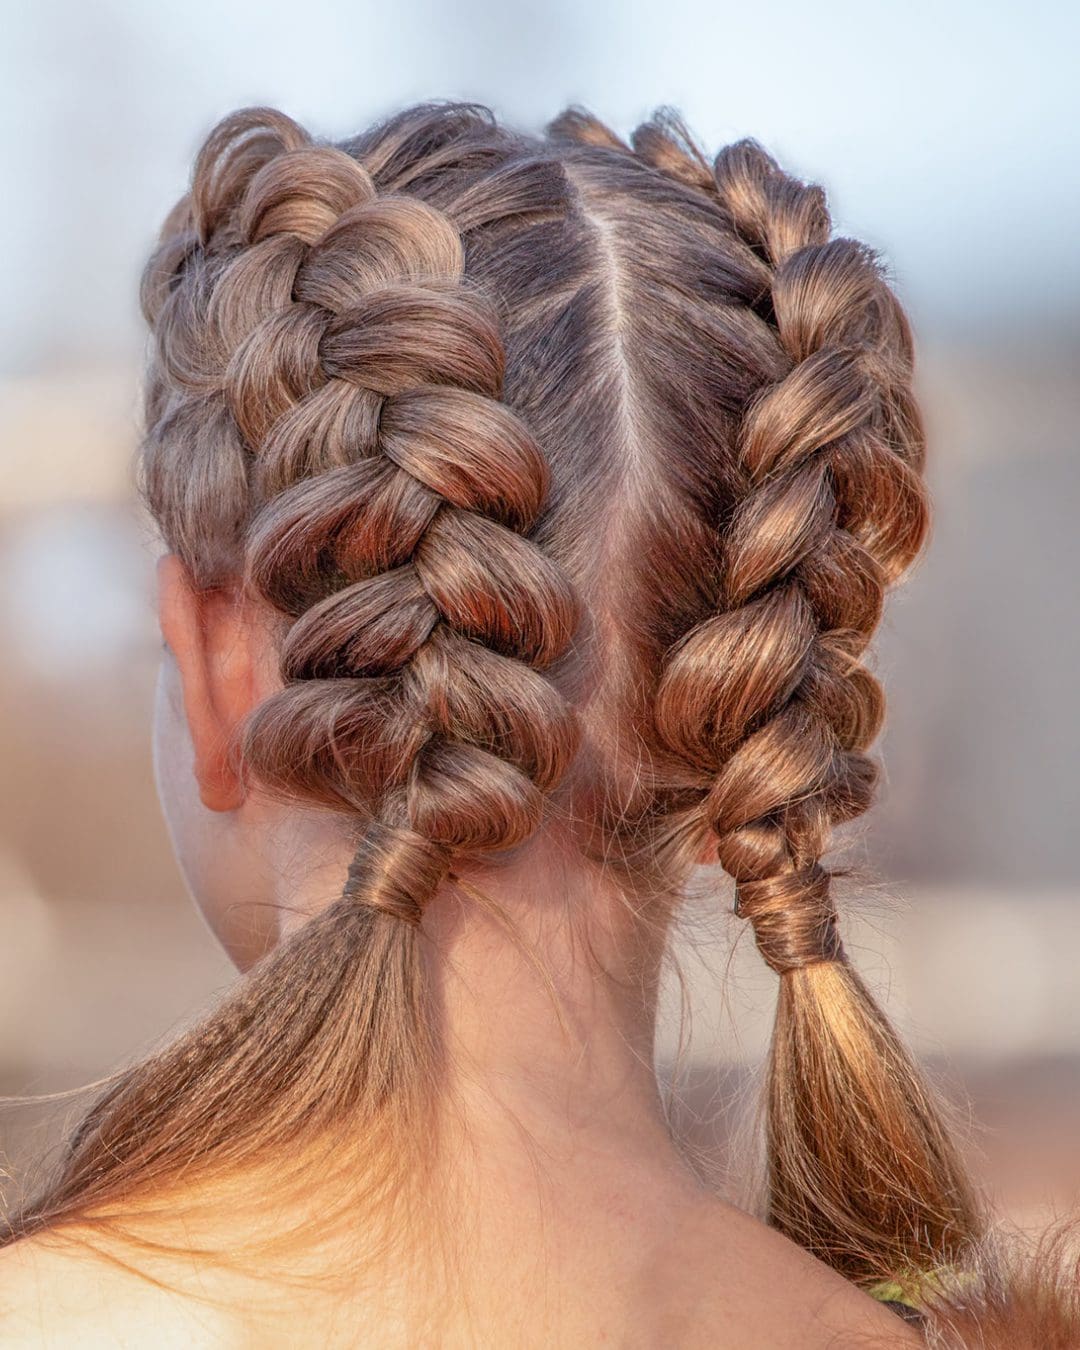 26 Cute Girls hairstyles for summer and winter season - Sensod